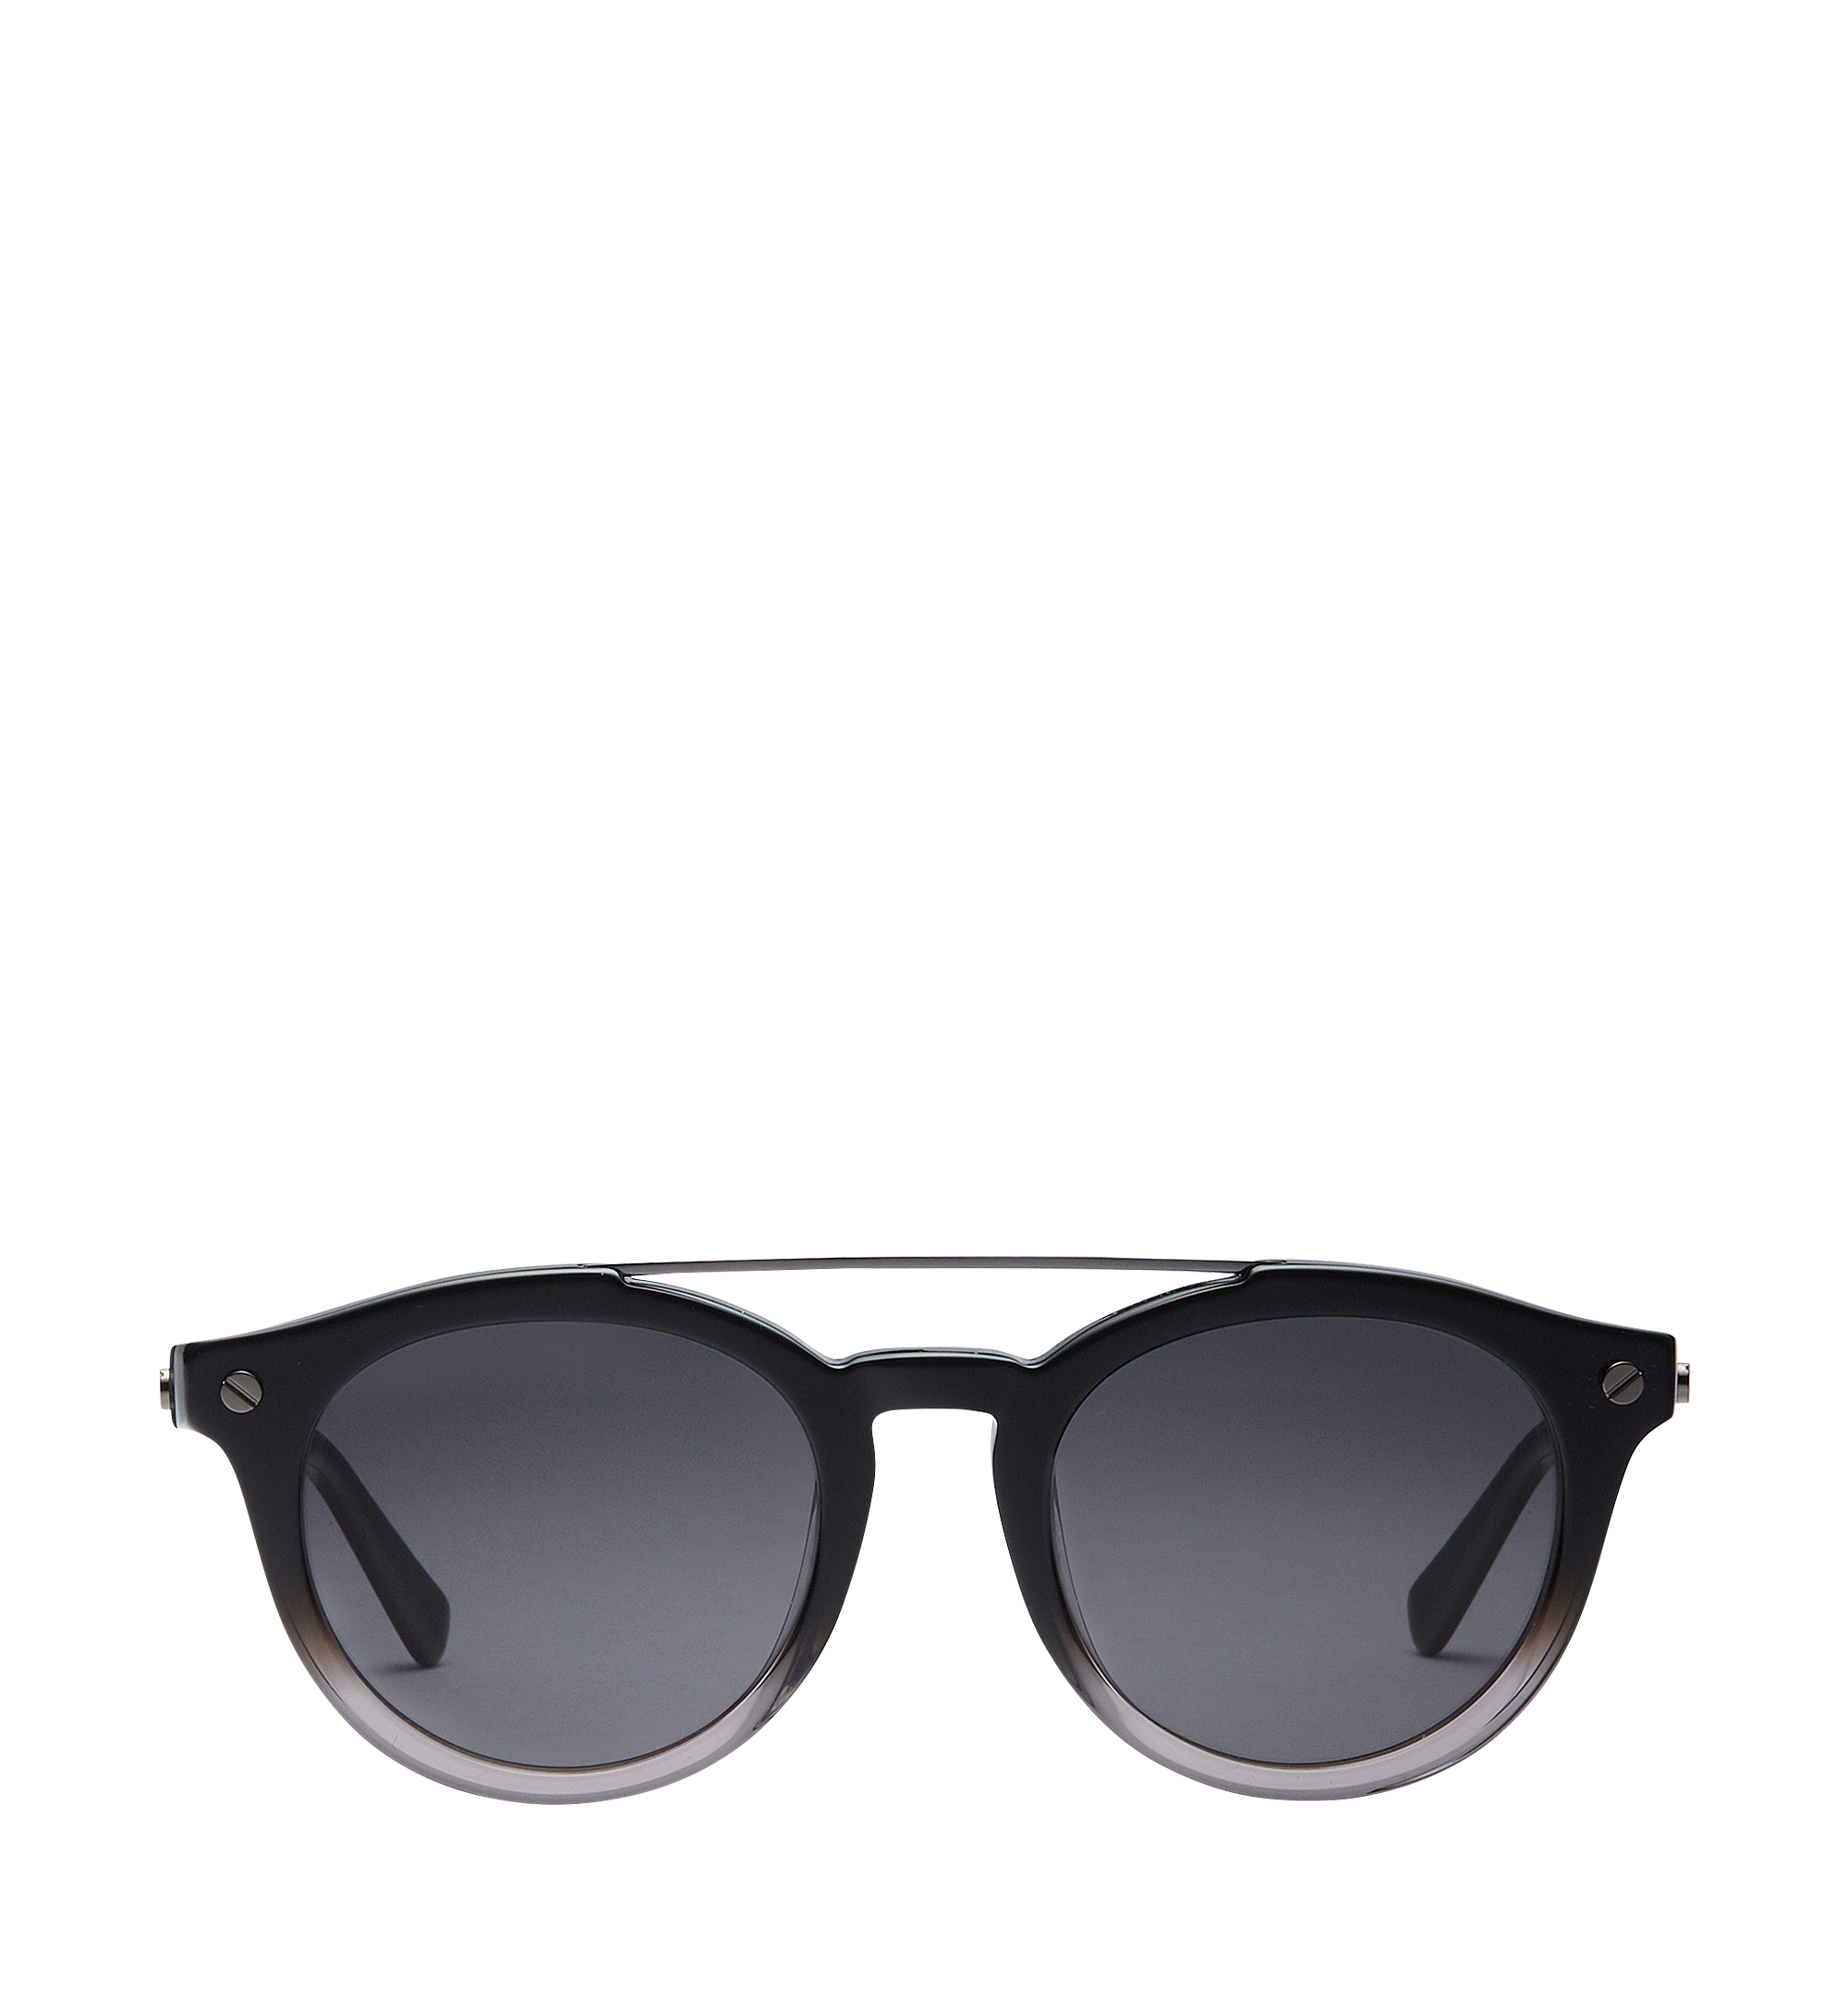 One Size Round Aviator Sunglasses Black